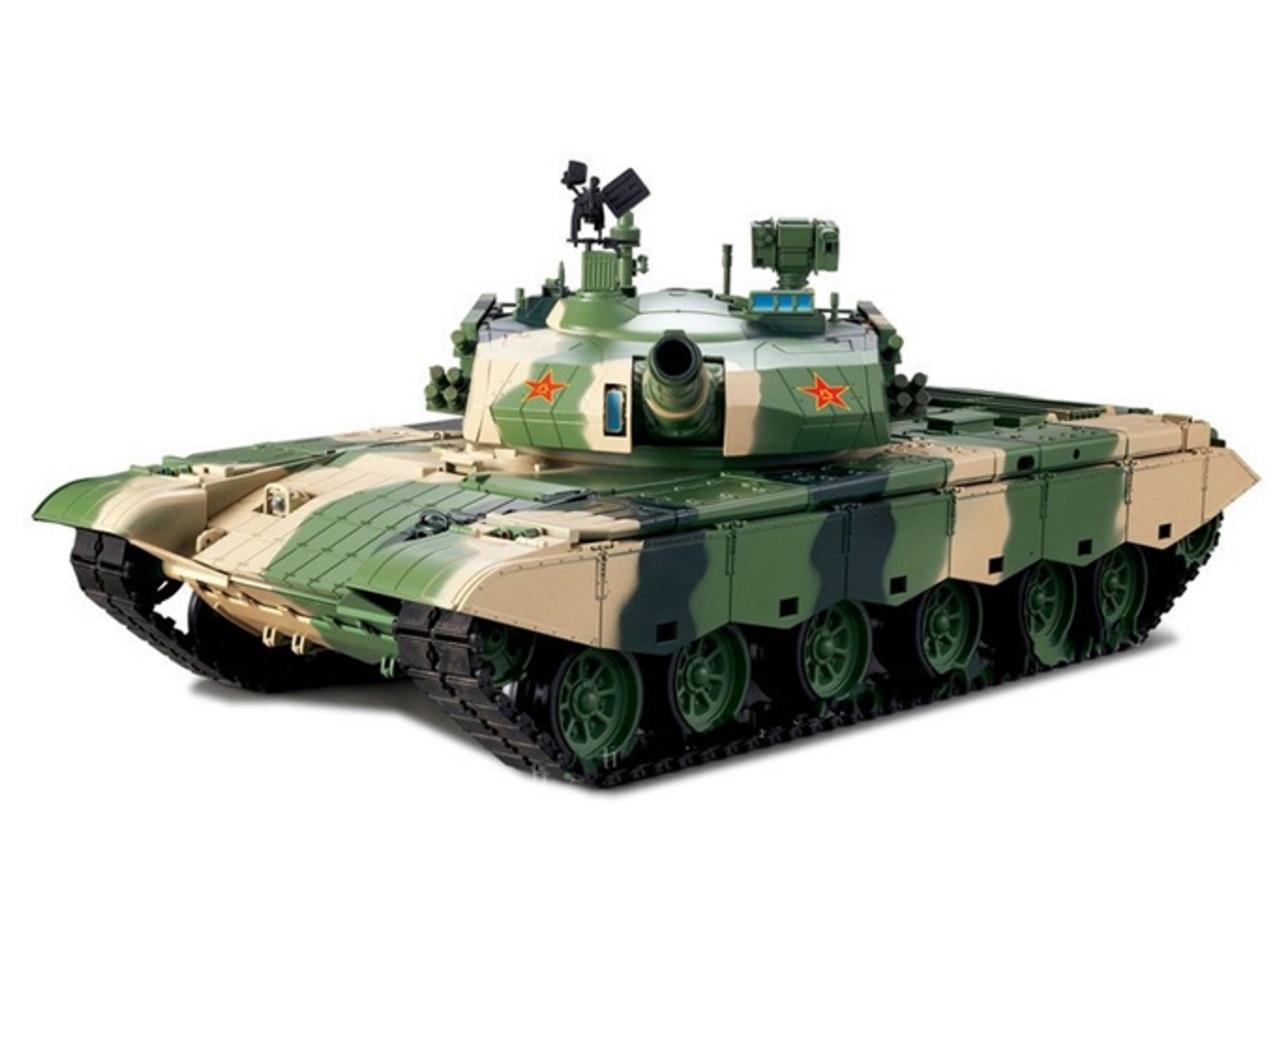 Купить танк heng long. Танк Heng long ZTZ-99a MBT (3899a-1pro) 1:16. Радиоуправляемый танк Heng long. ZTZ 99a MBT. Танк ZTZ-99a.